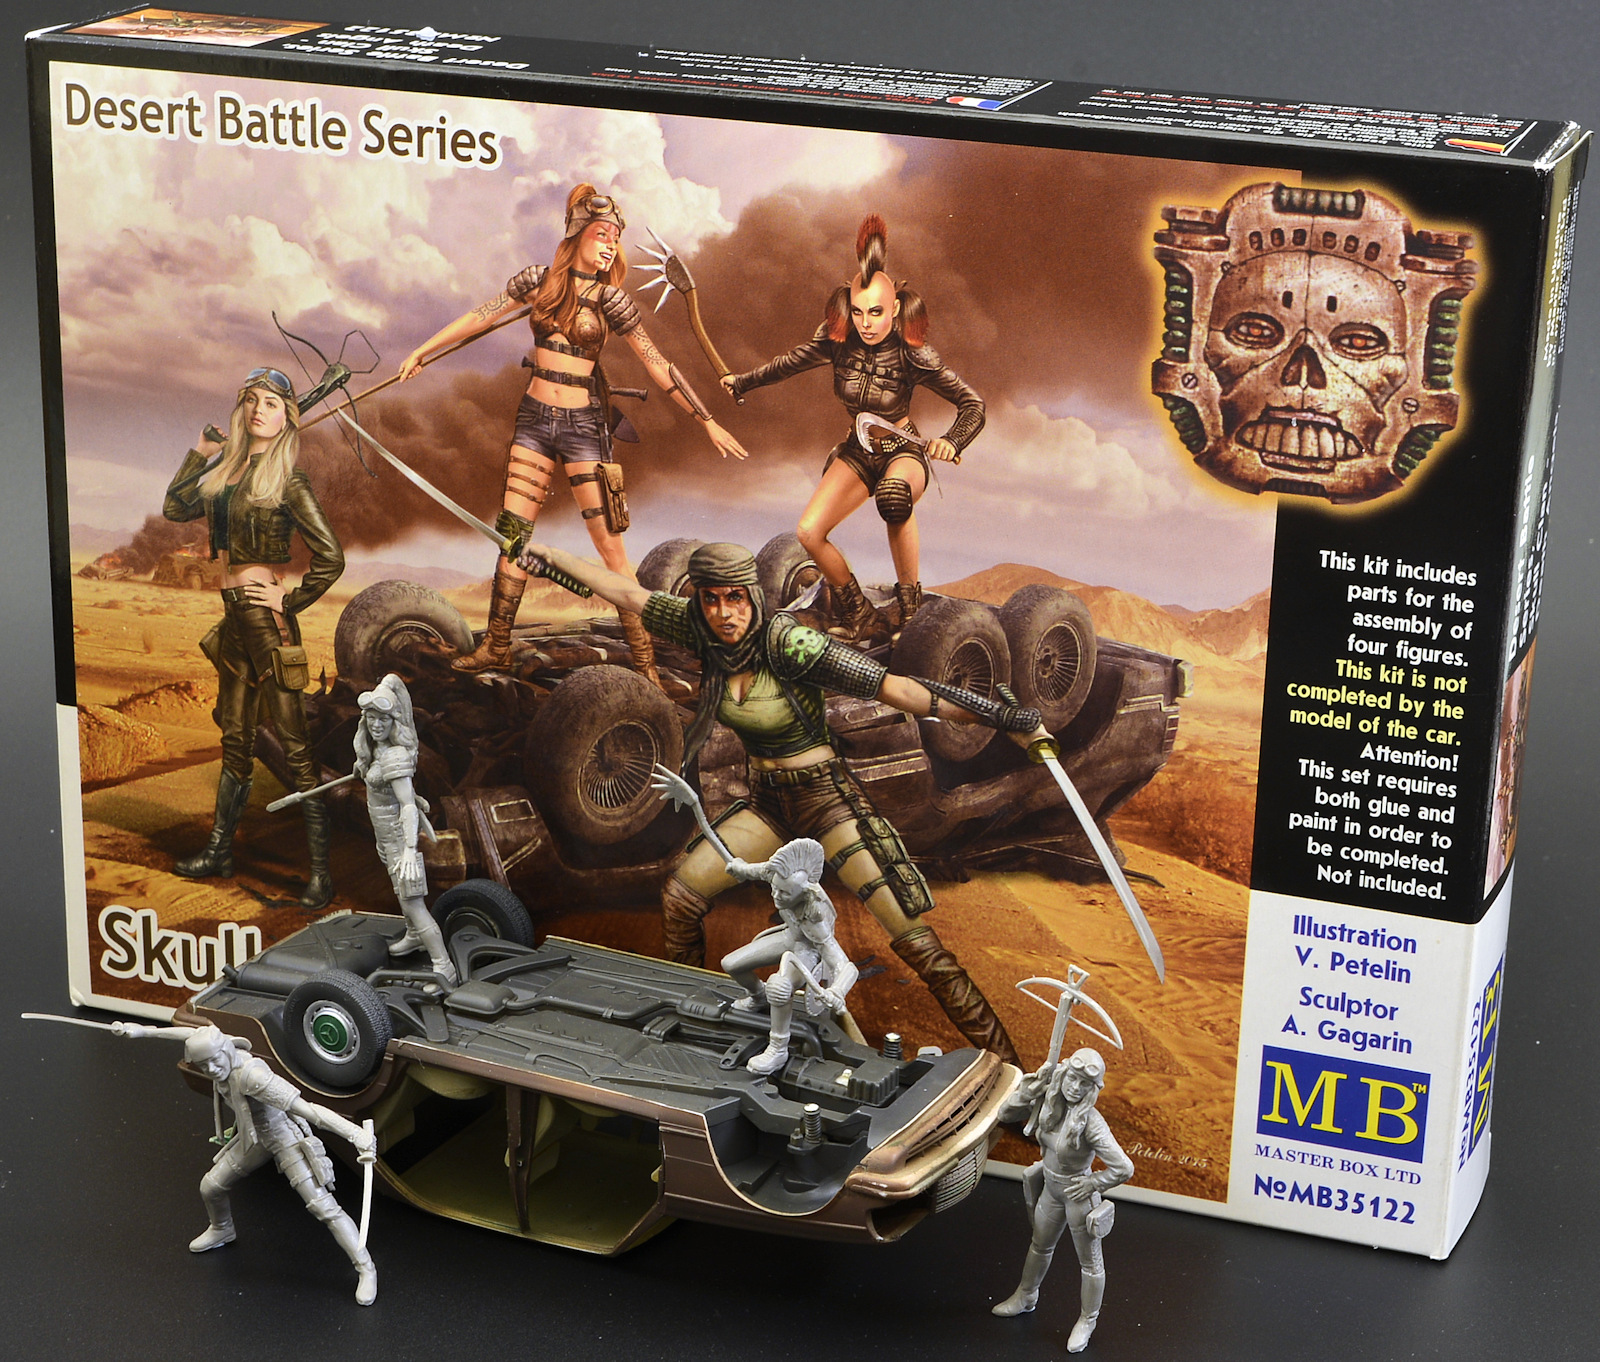 Masterbox 1:35 scale kit Desert Battle Series Skull Clan Death Angels  MAS35122